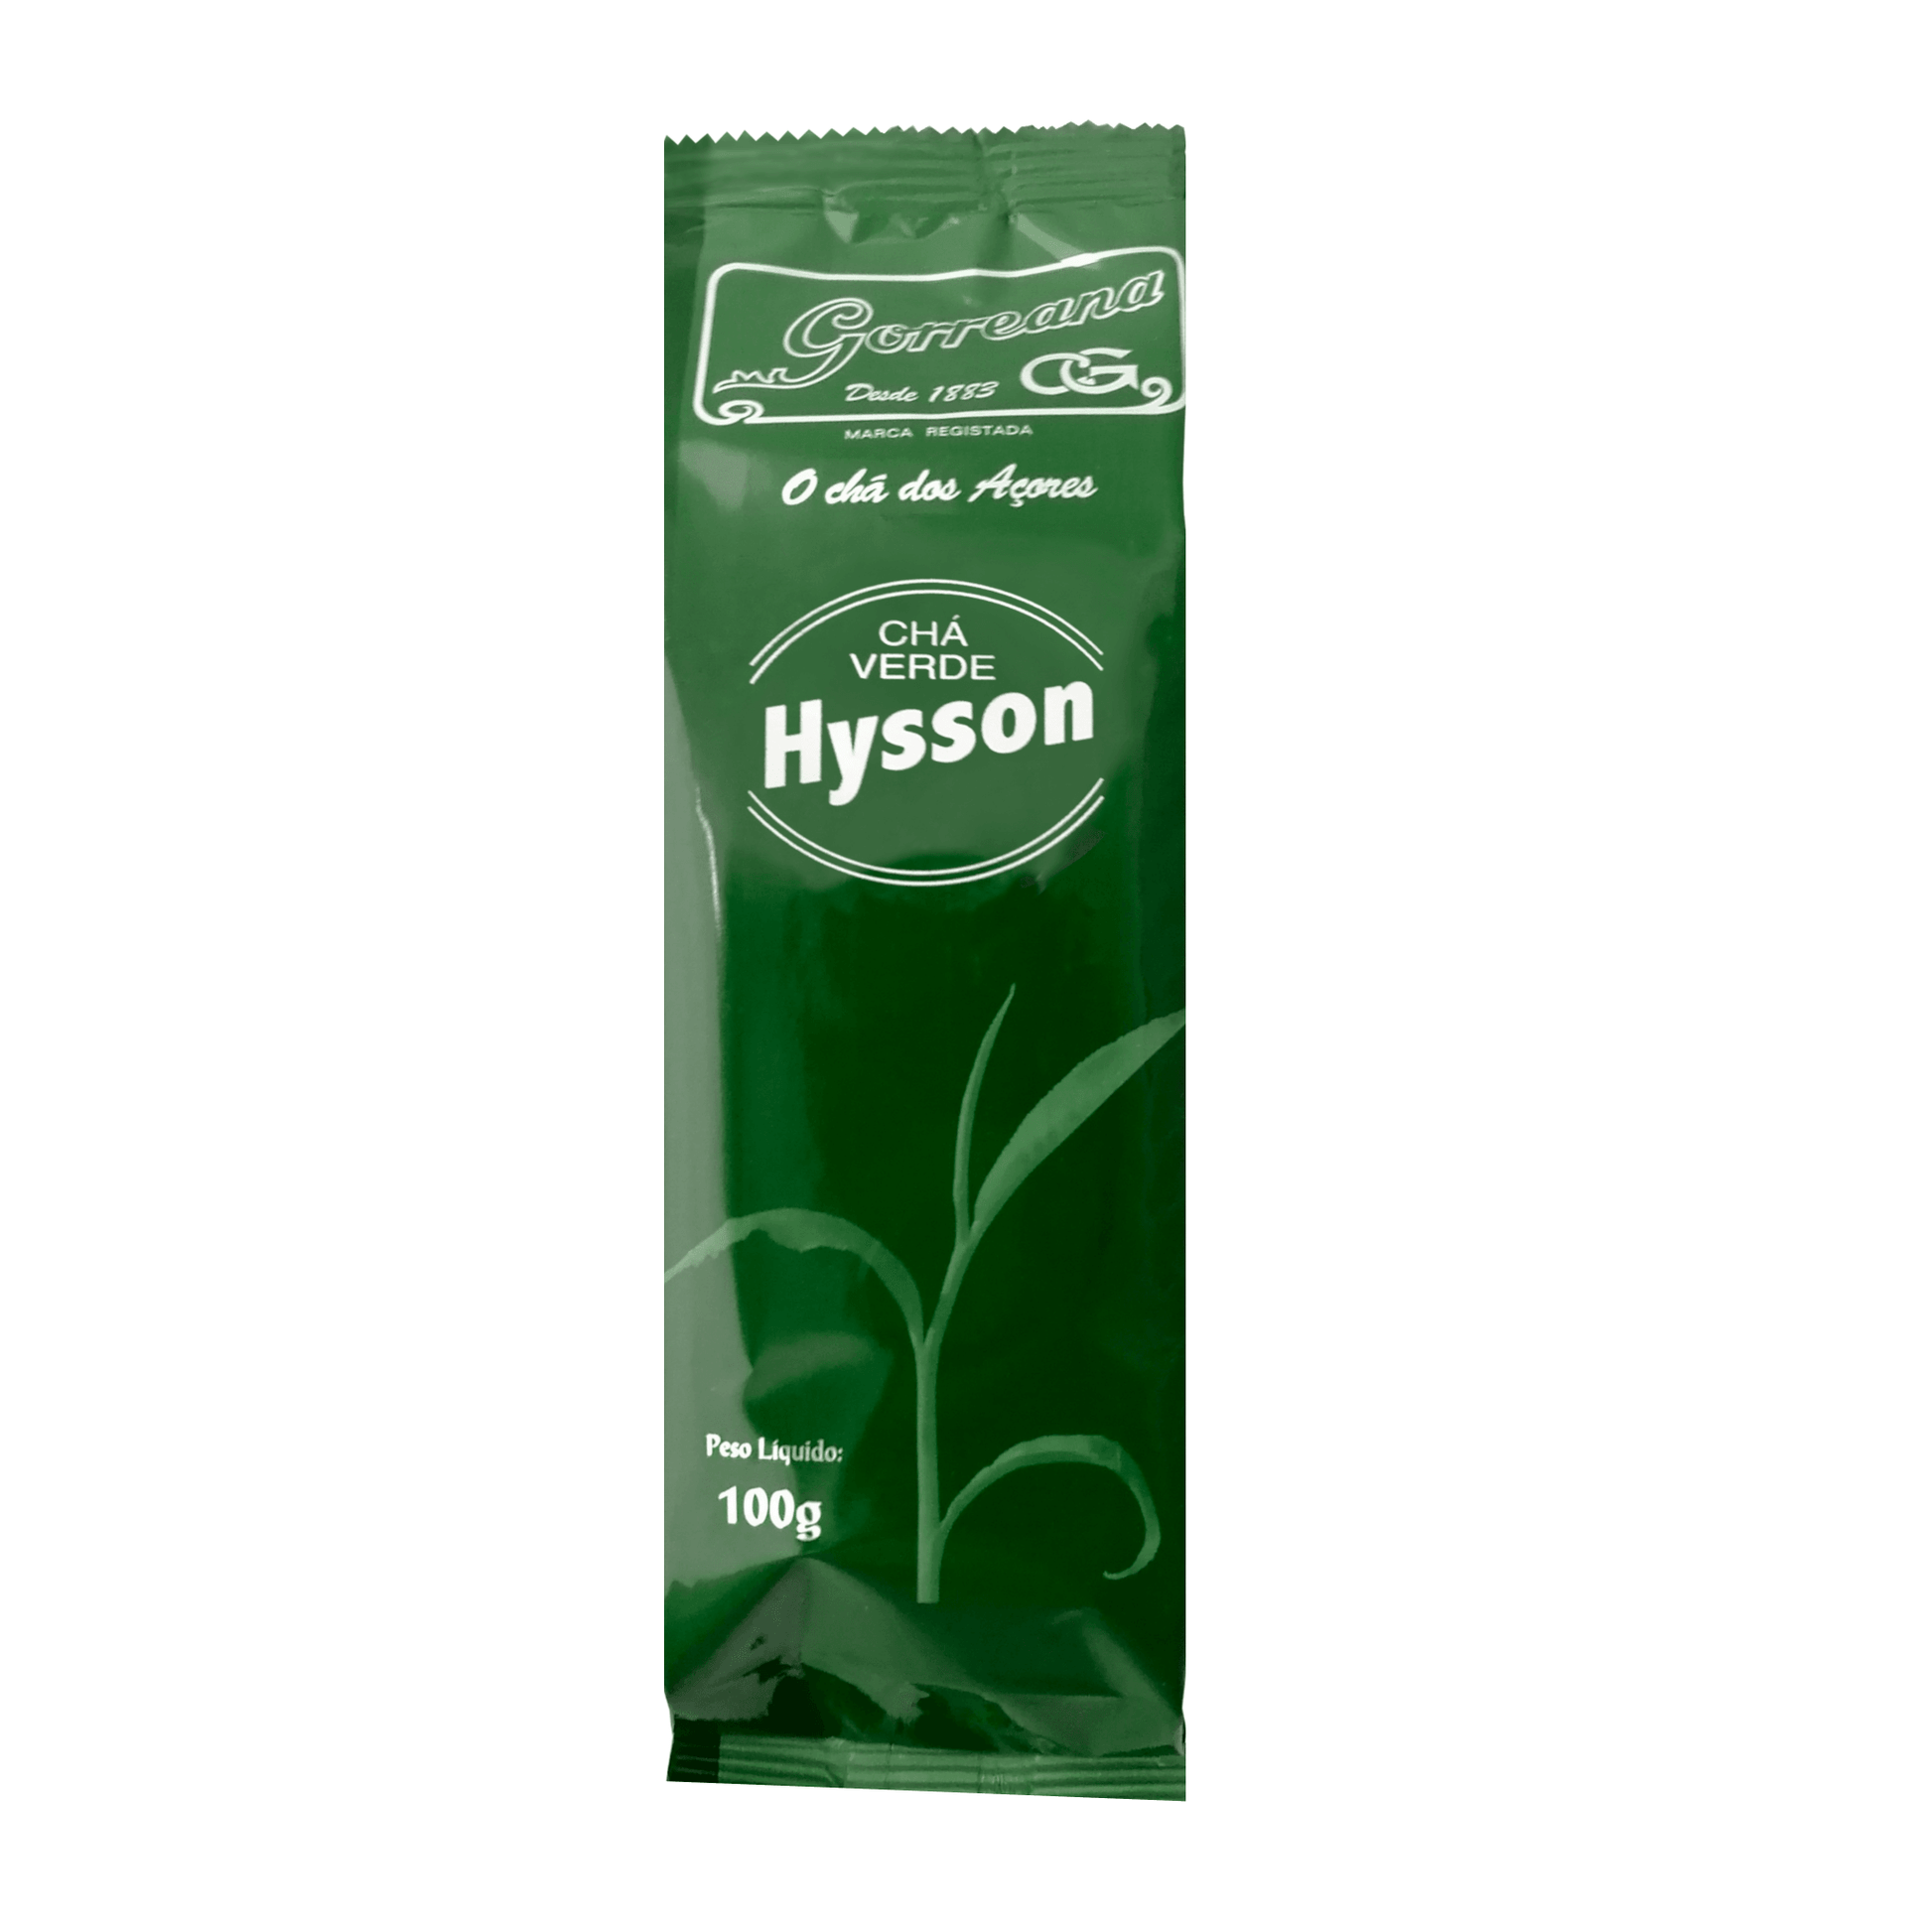 Teekrone: Chá Verde Gorreana Hysson 100g